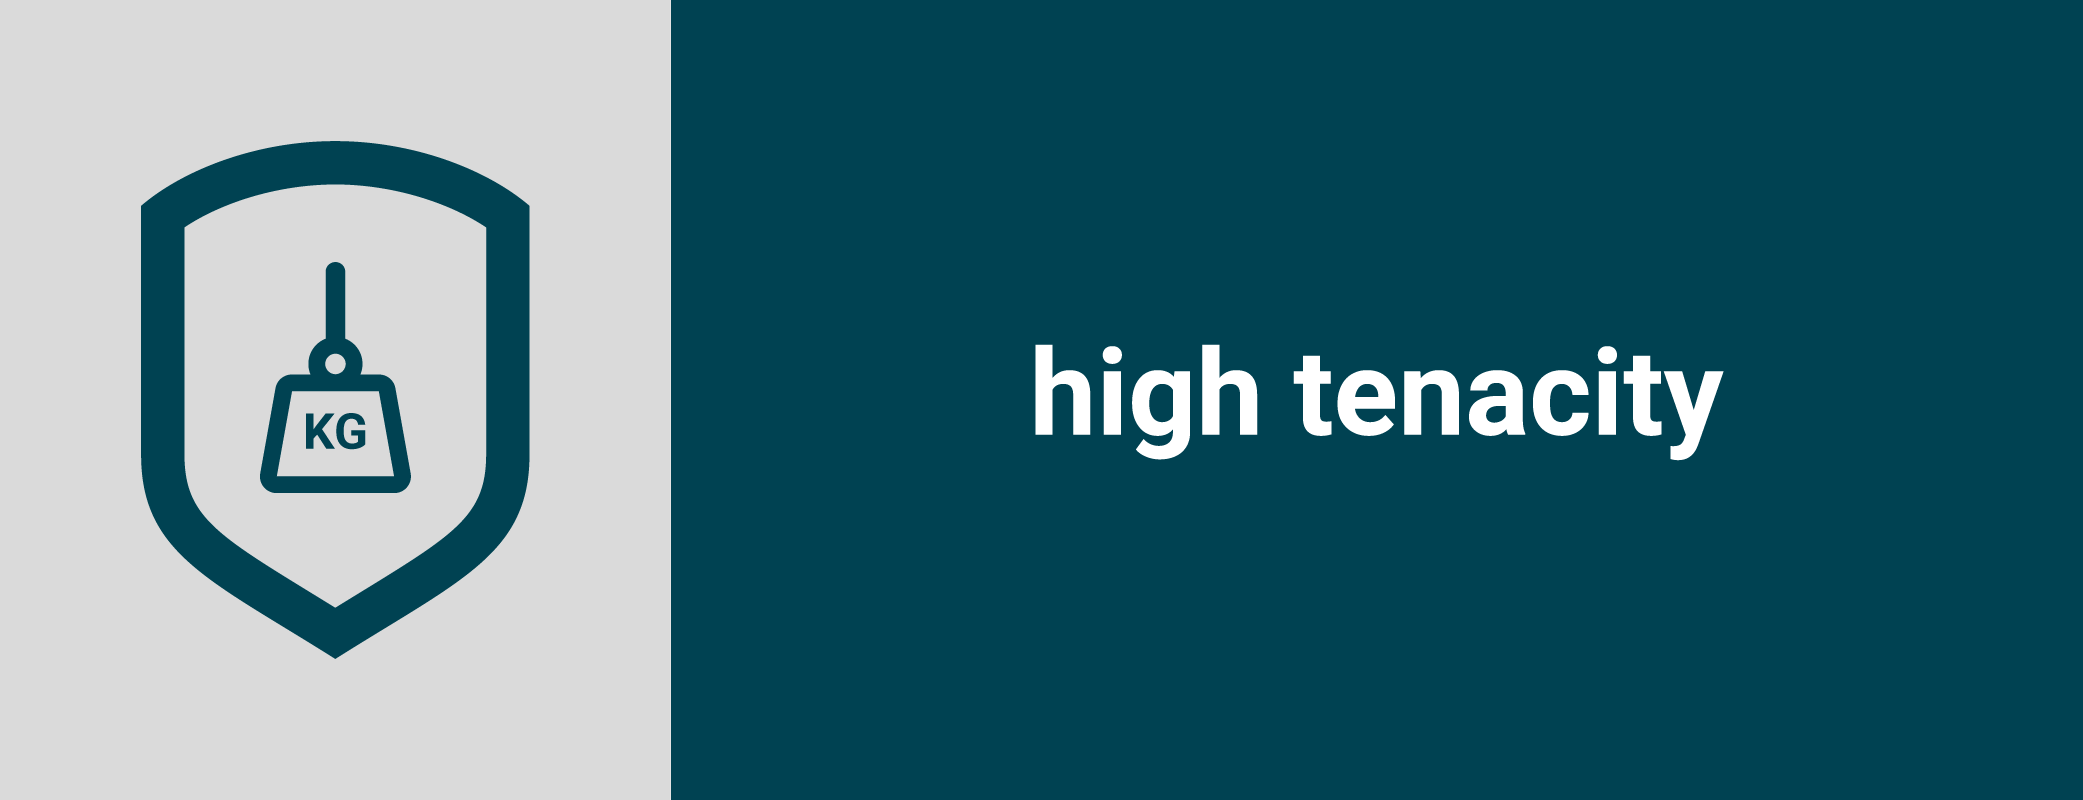 TFF_Icons_high_tenacity